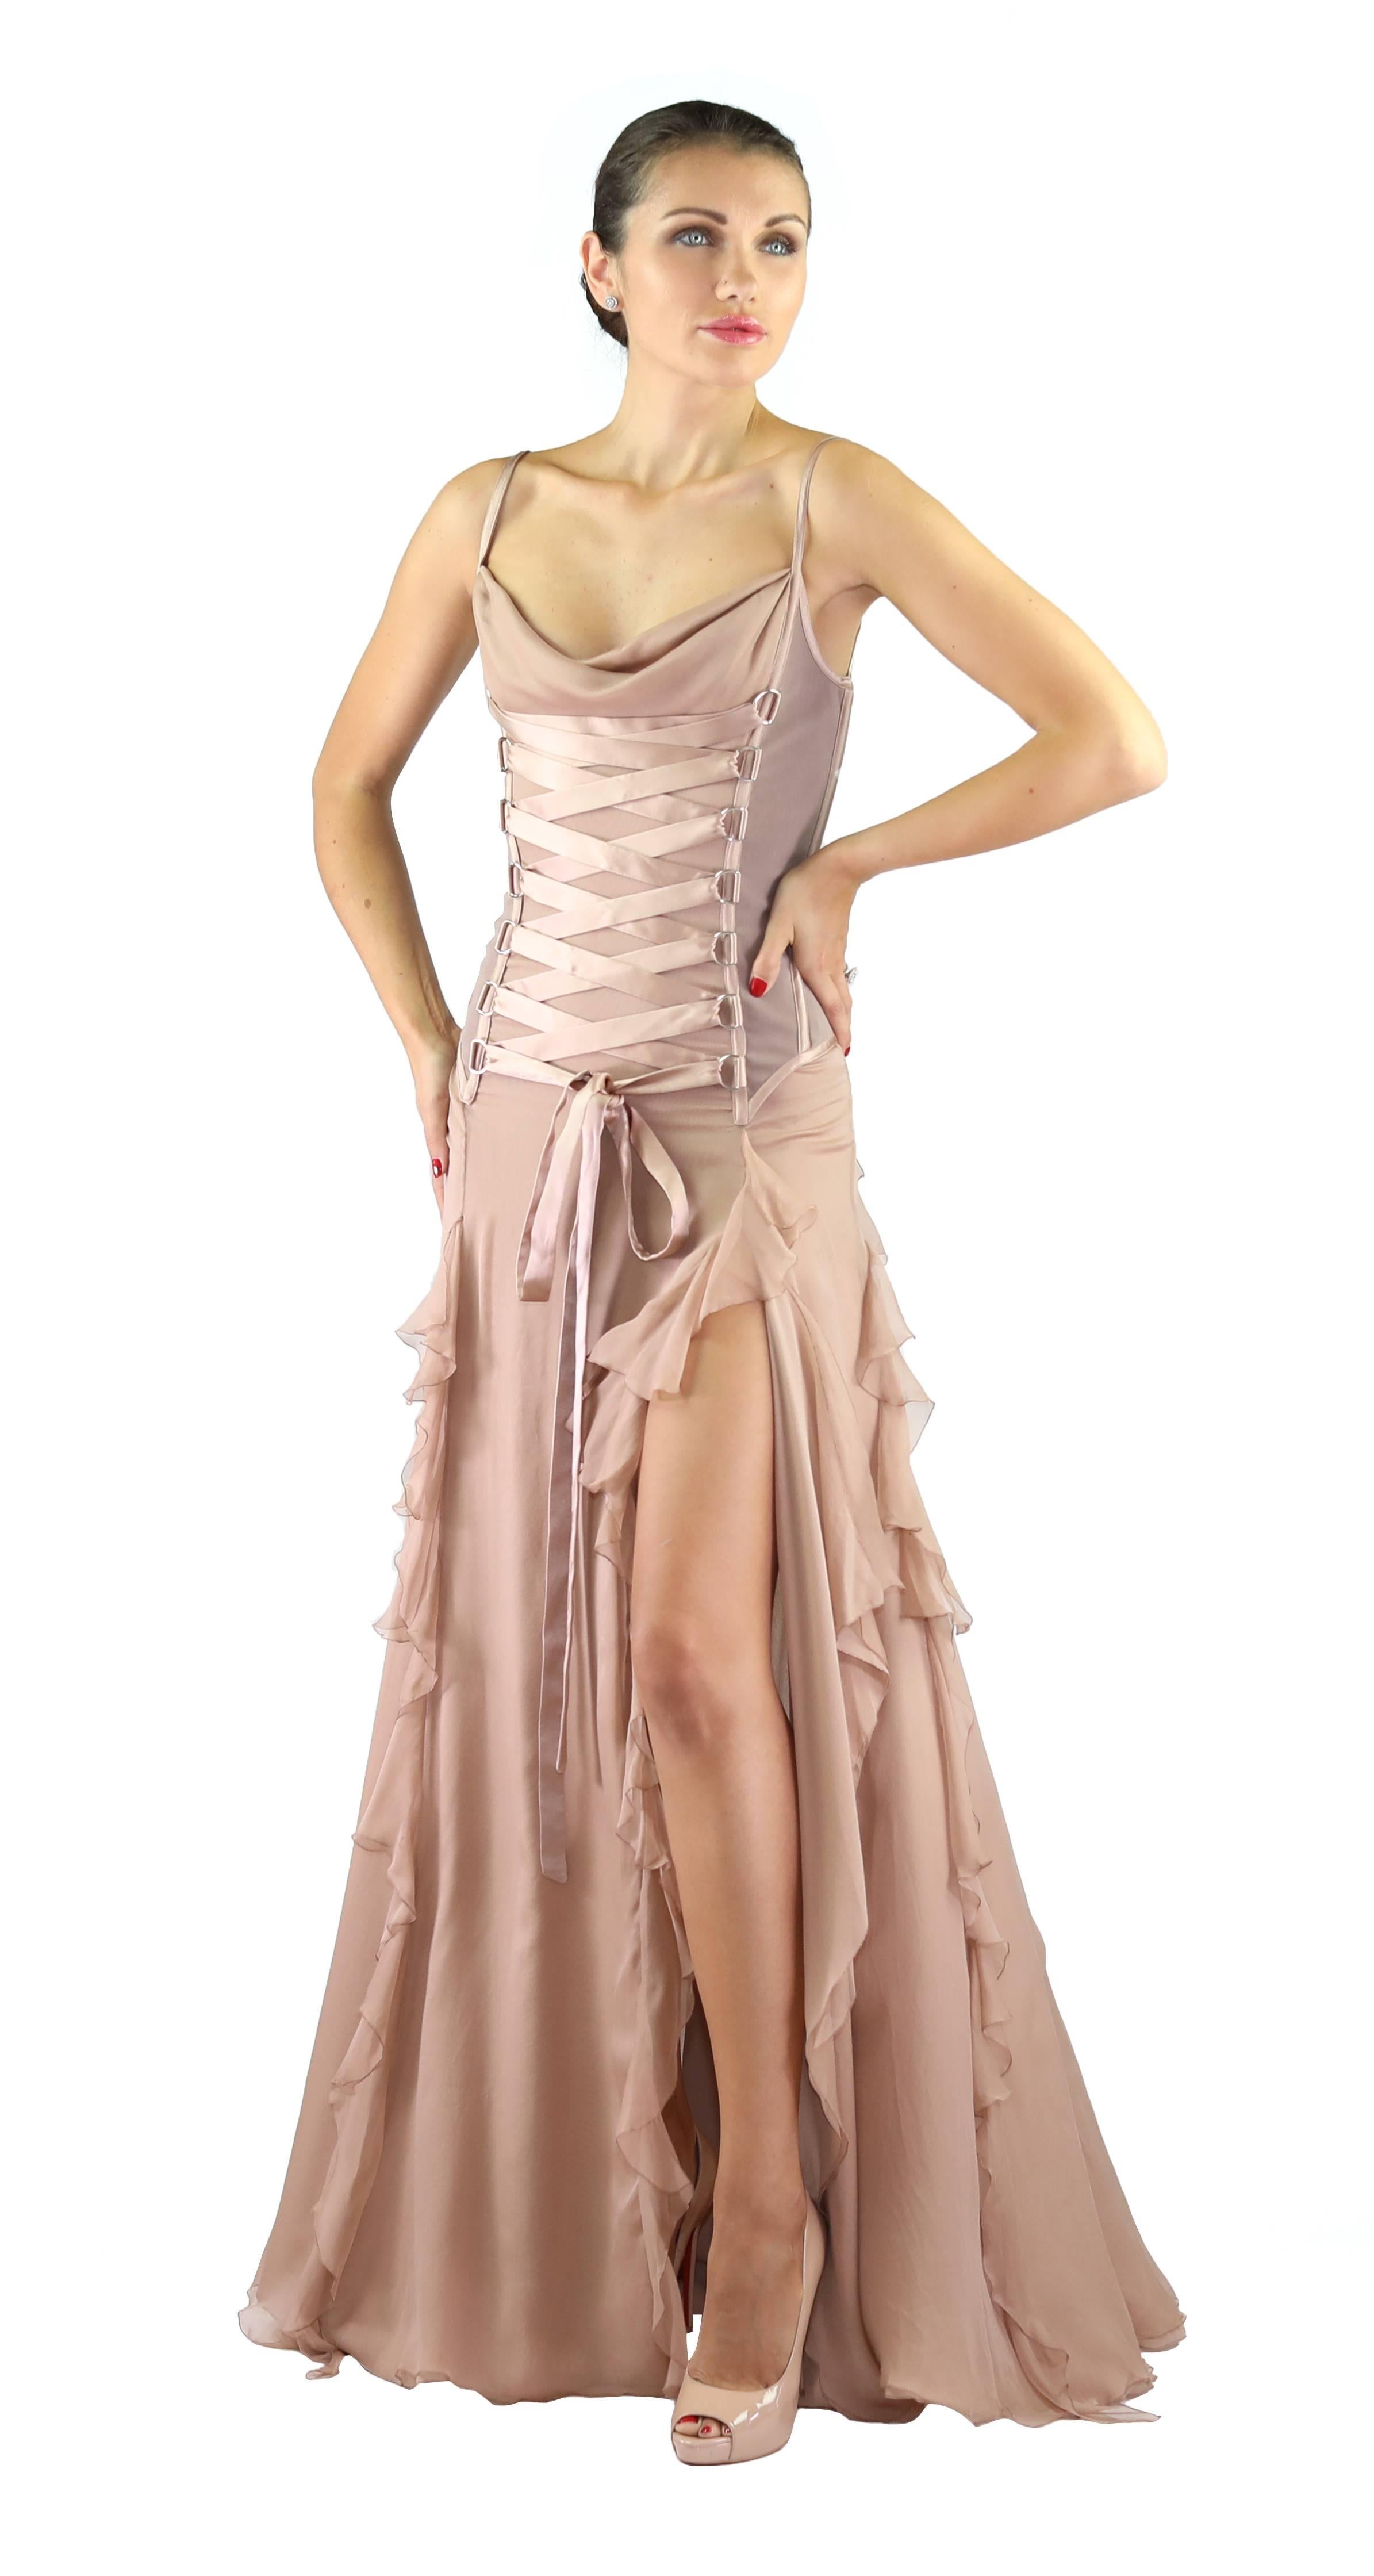 versace corset dress 2003